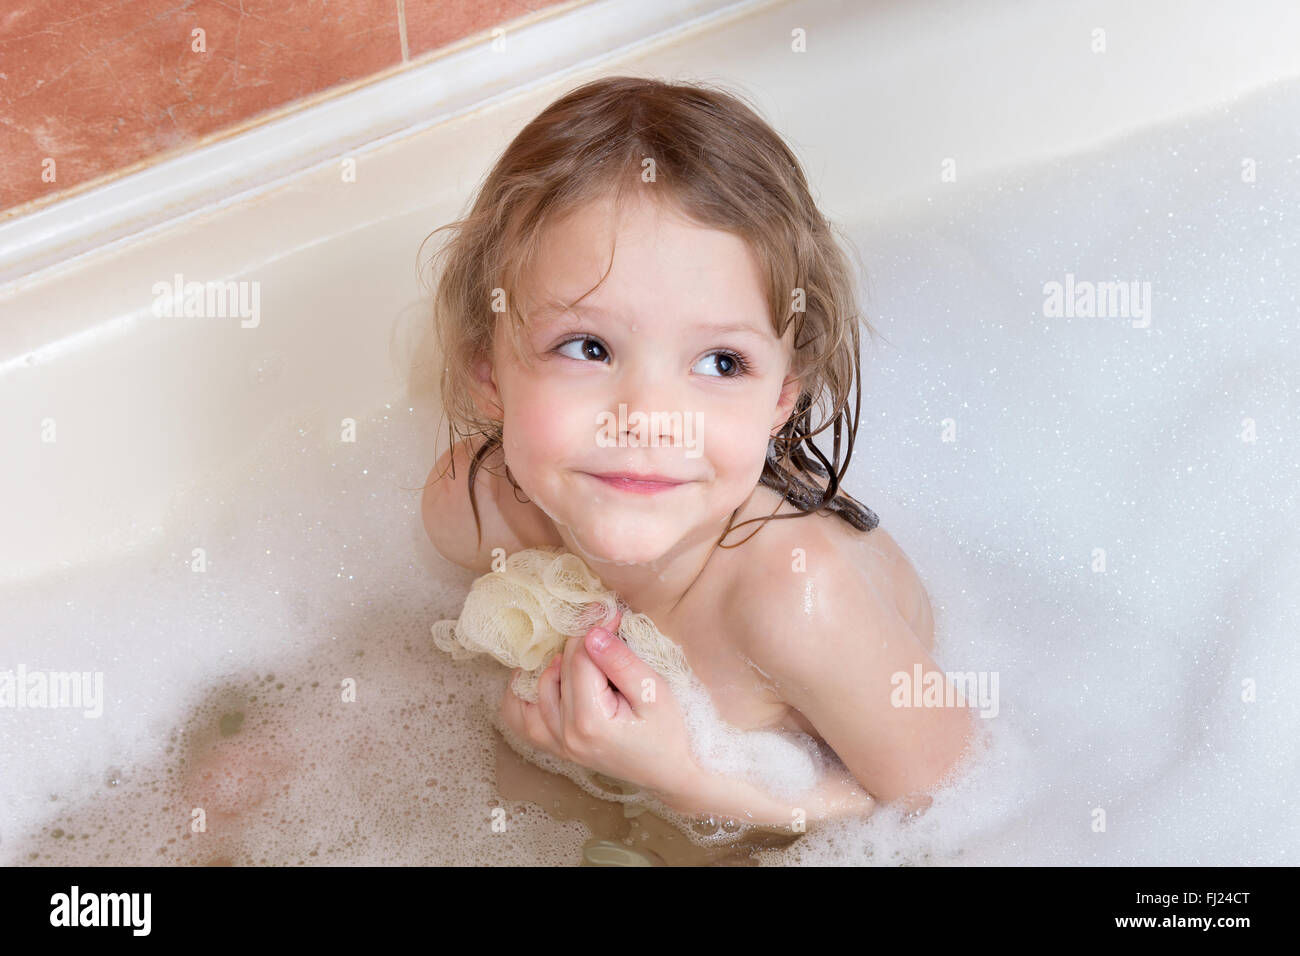 little girl taking a bath with foam Stock Photo: 97163048 - Alamy